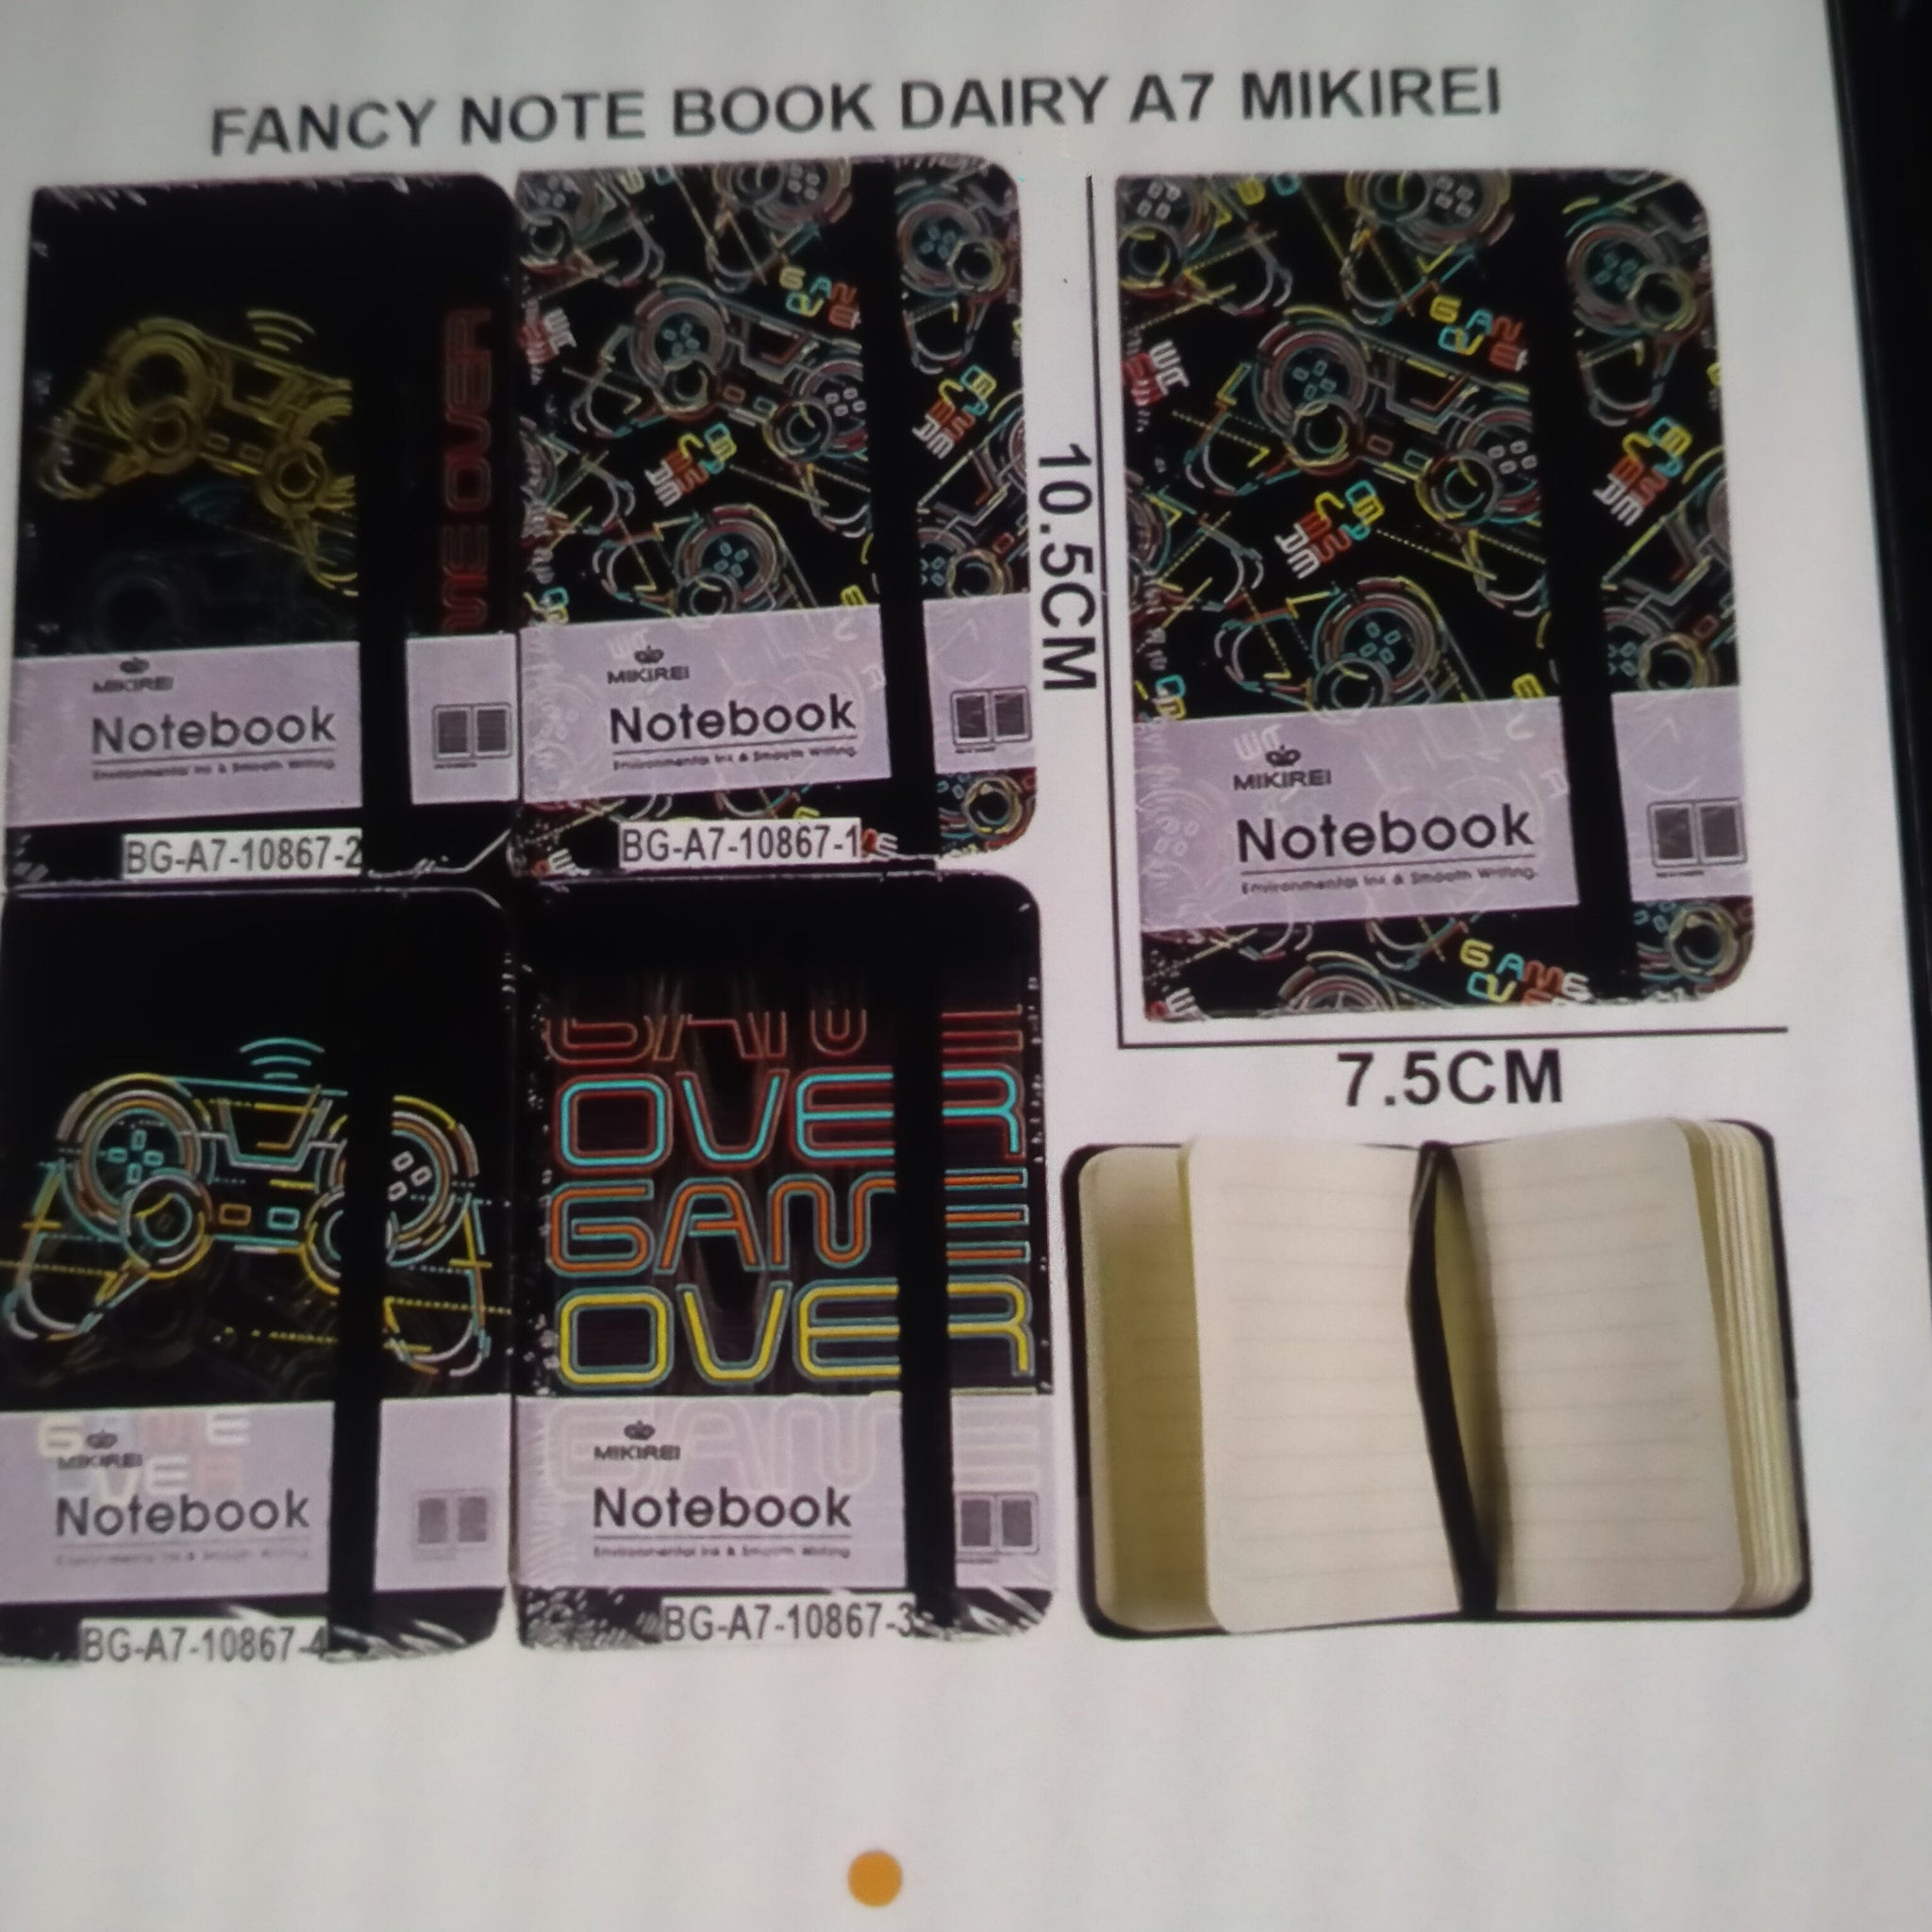 Ravrai Craft - Mumbai Branch NOTE BOOK DIARY A7 note book dairy